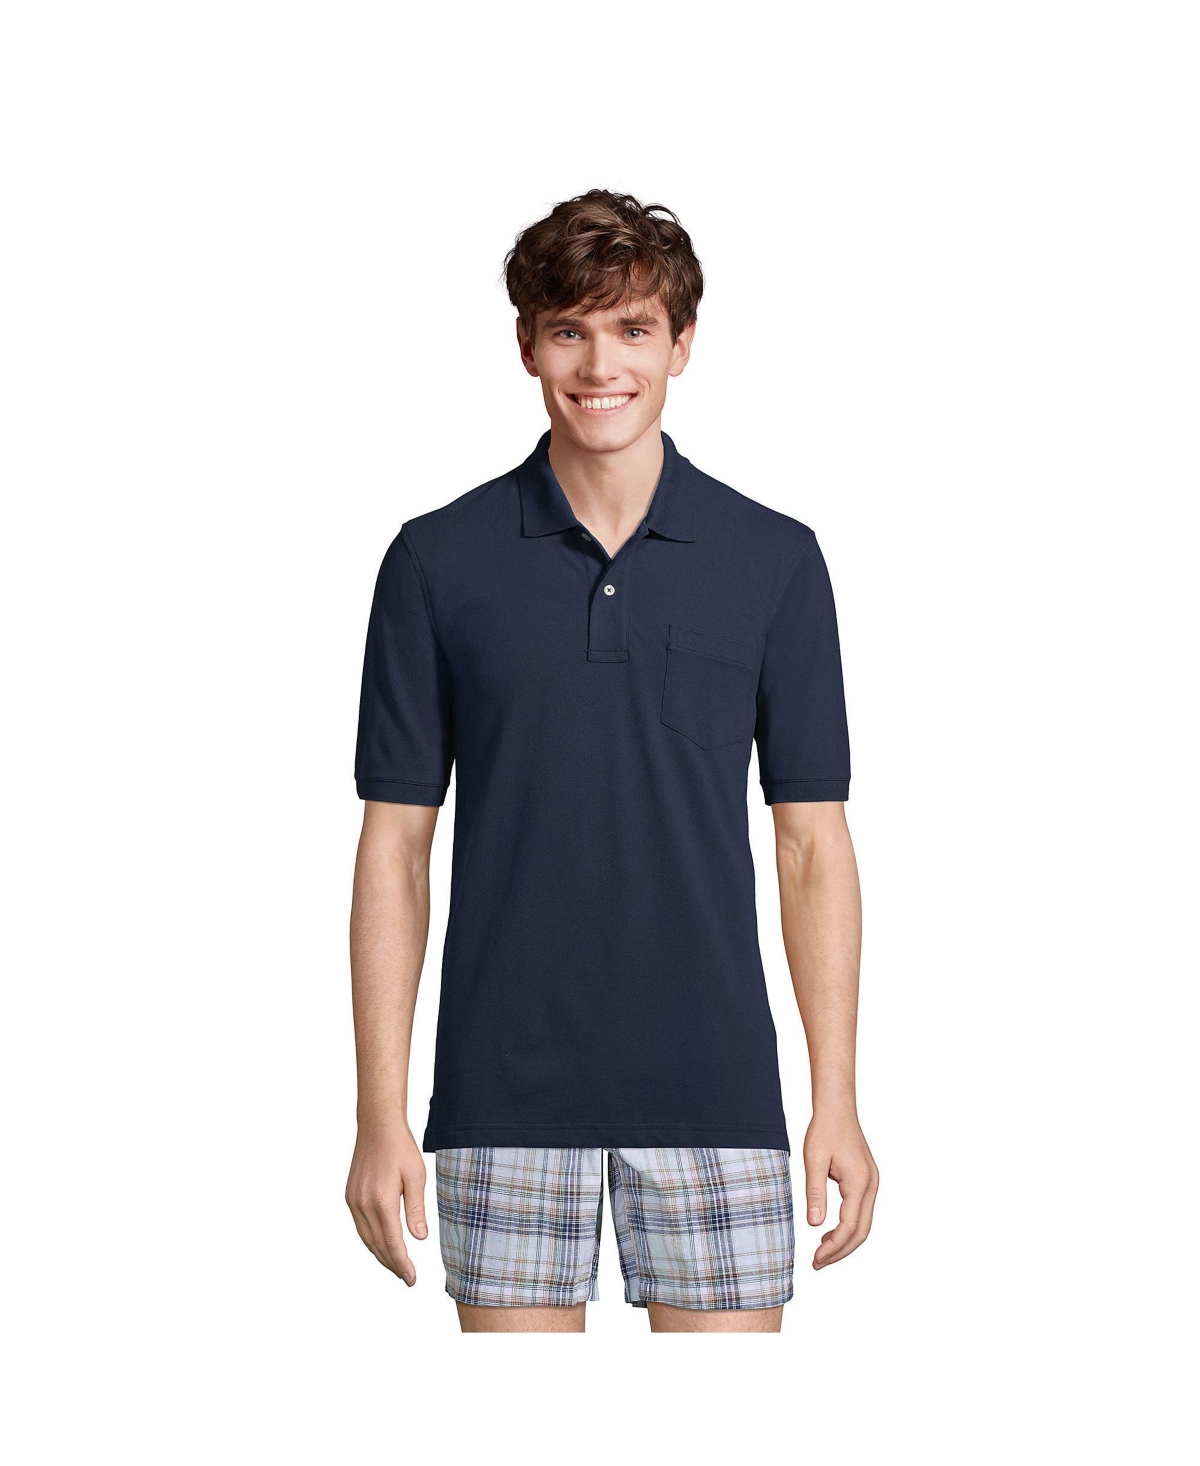 Men's Short Sleeve Comfort-First Mesh Polo Shirt With Pocket - Royal cobalt